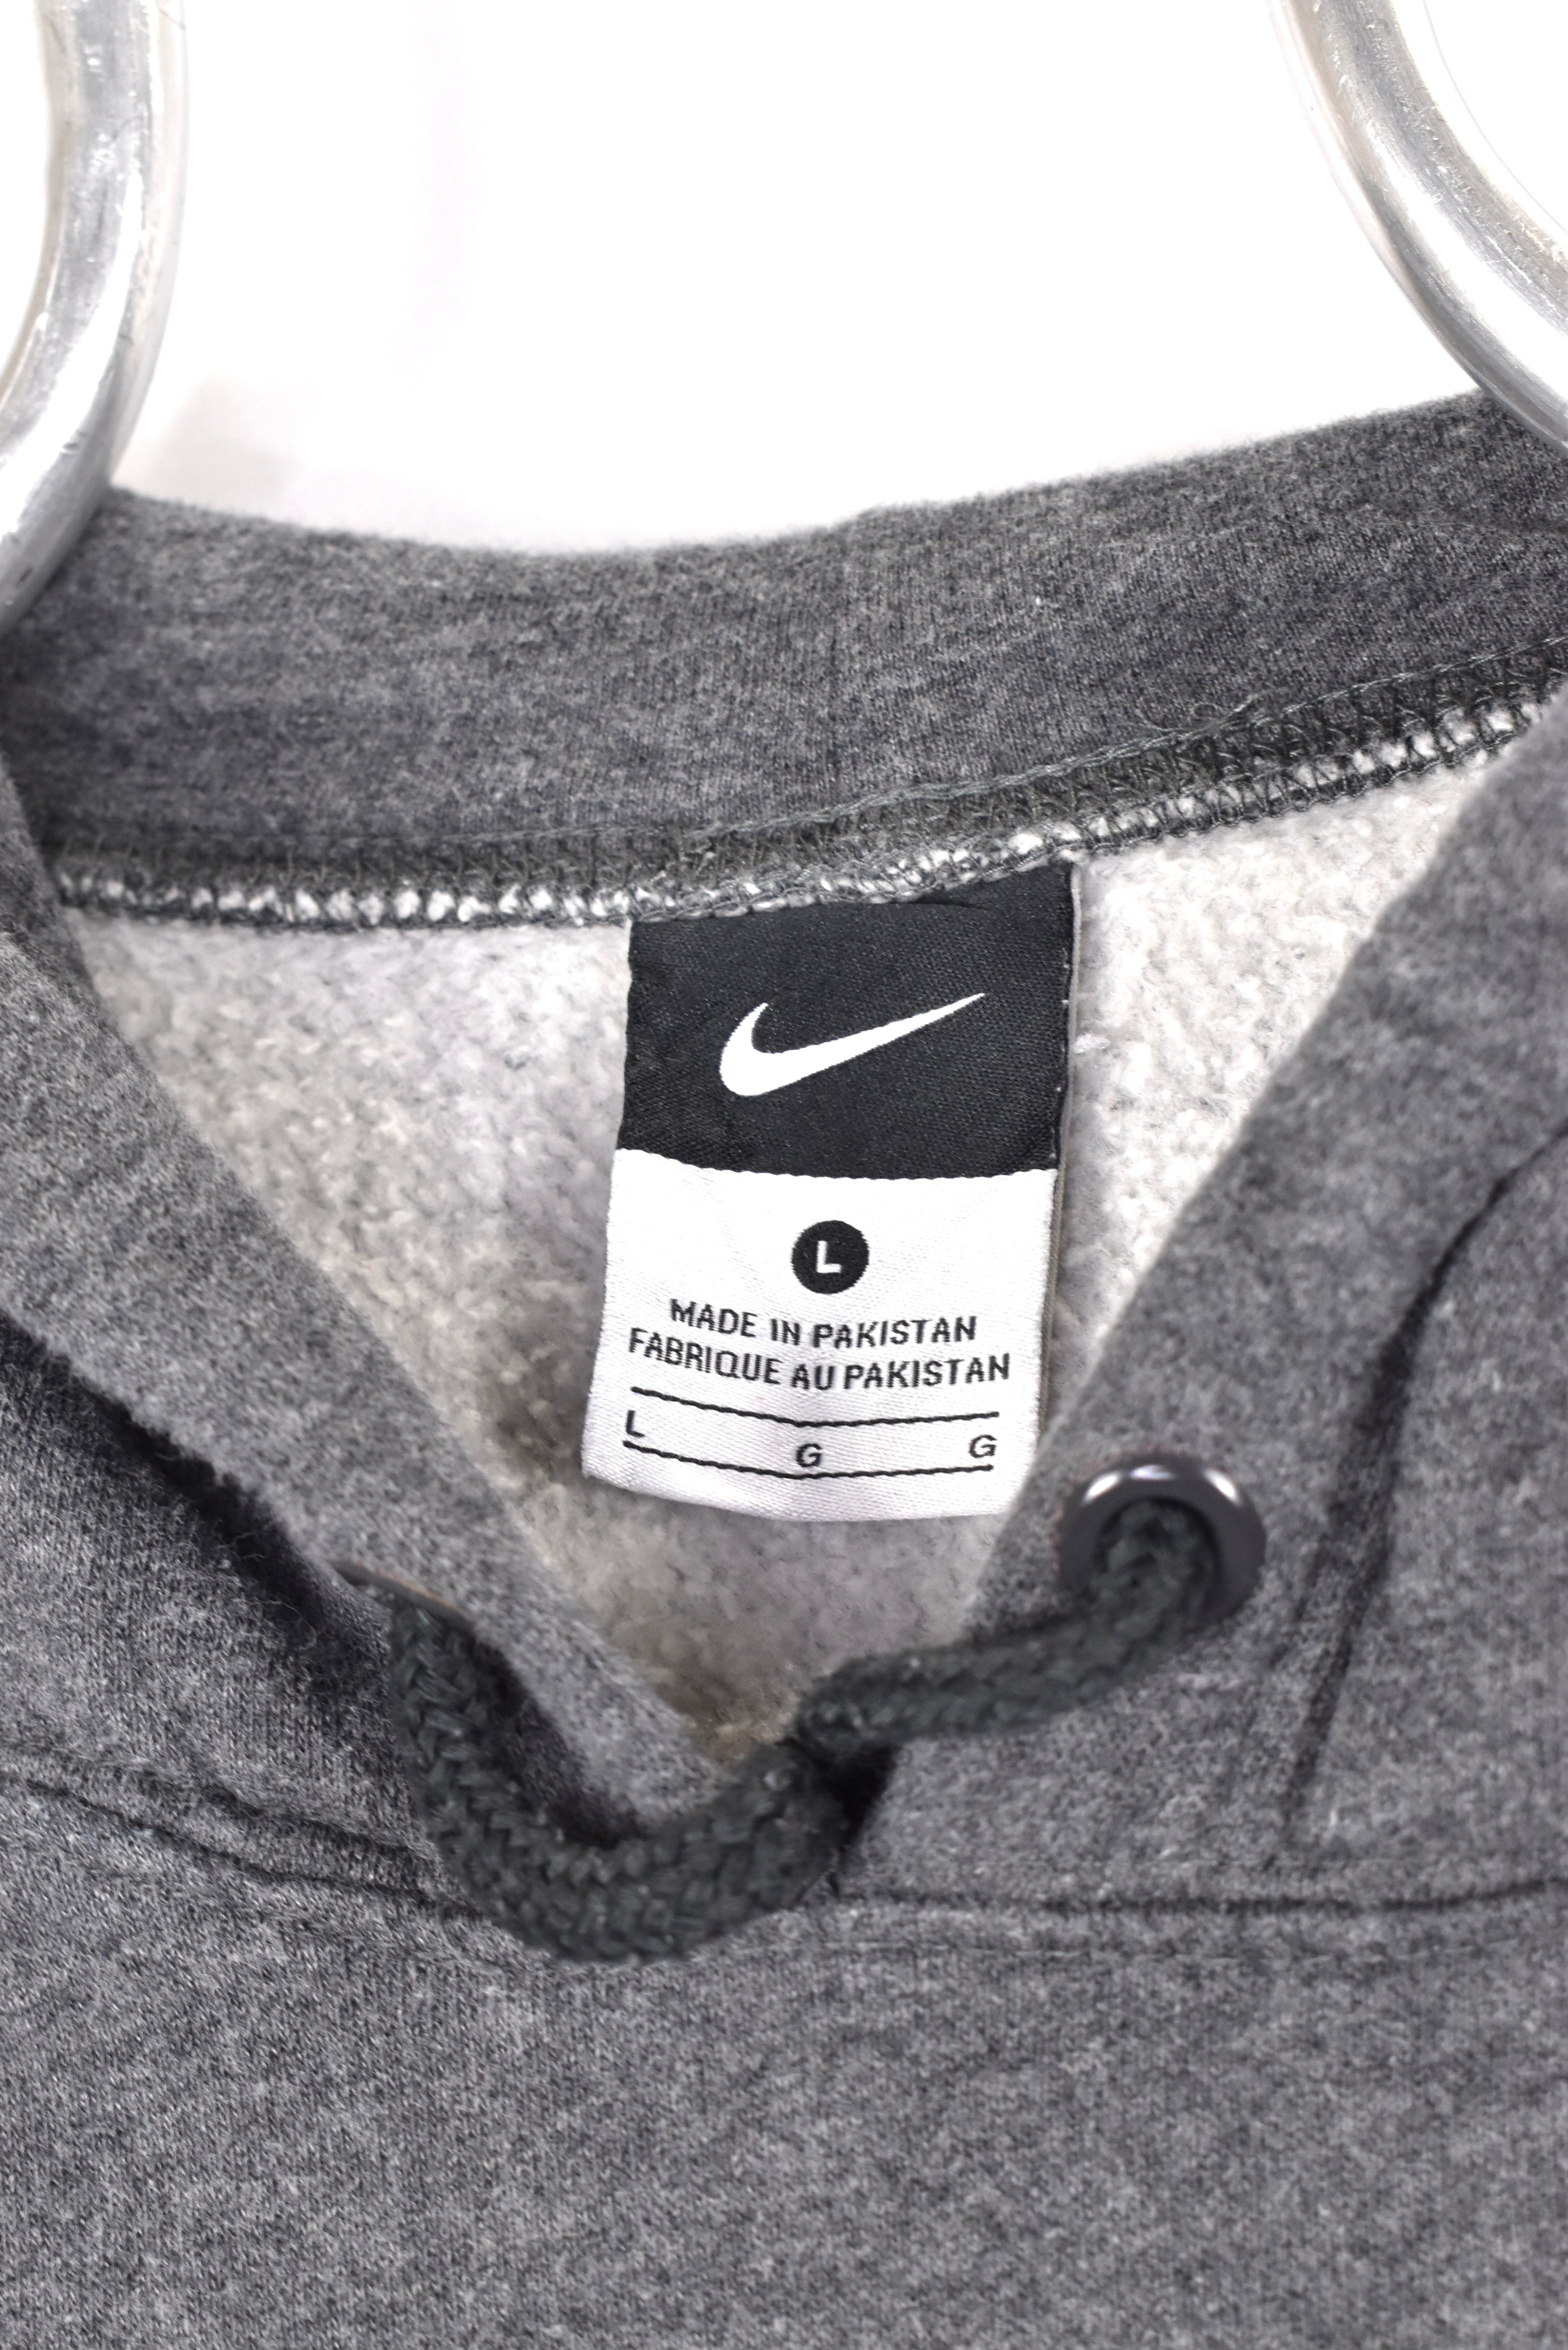 Vintage Nike hoodie, grey embroidered sweatshirt - AU Large NIKE